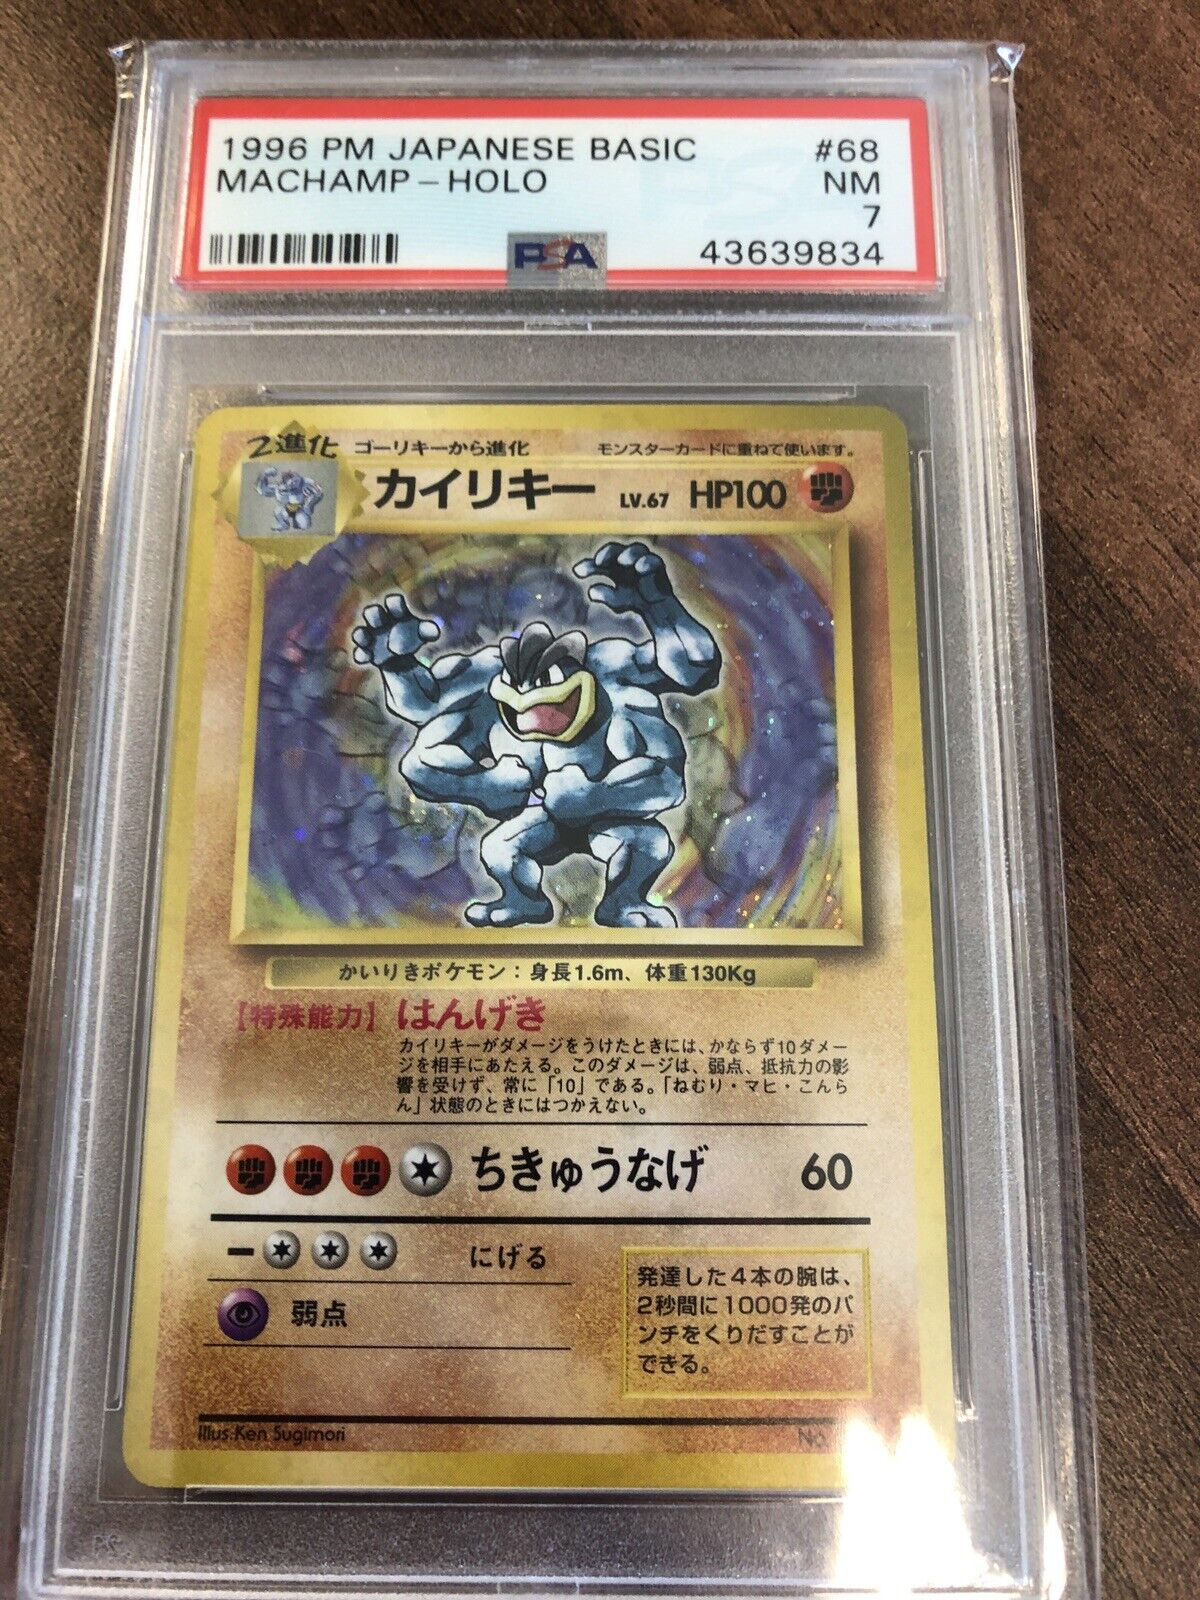 1996 PM Japanese Machamp PSA 7 Holo Pokemon Card 068 Basic Vintage Rare #68